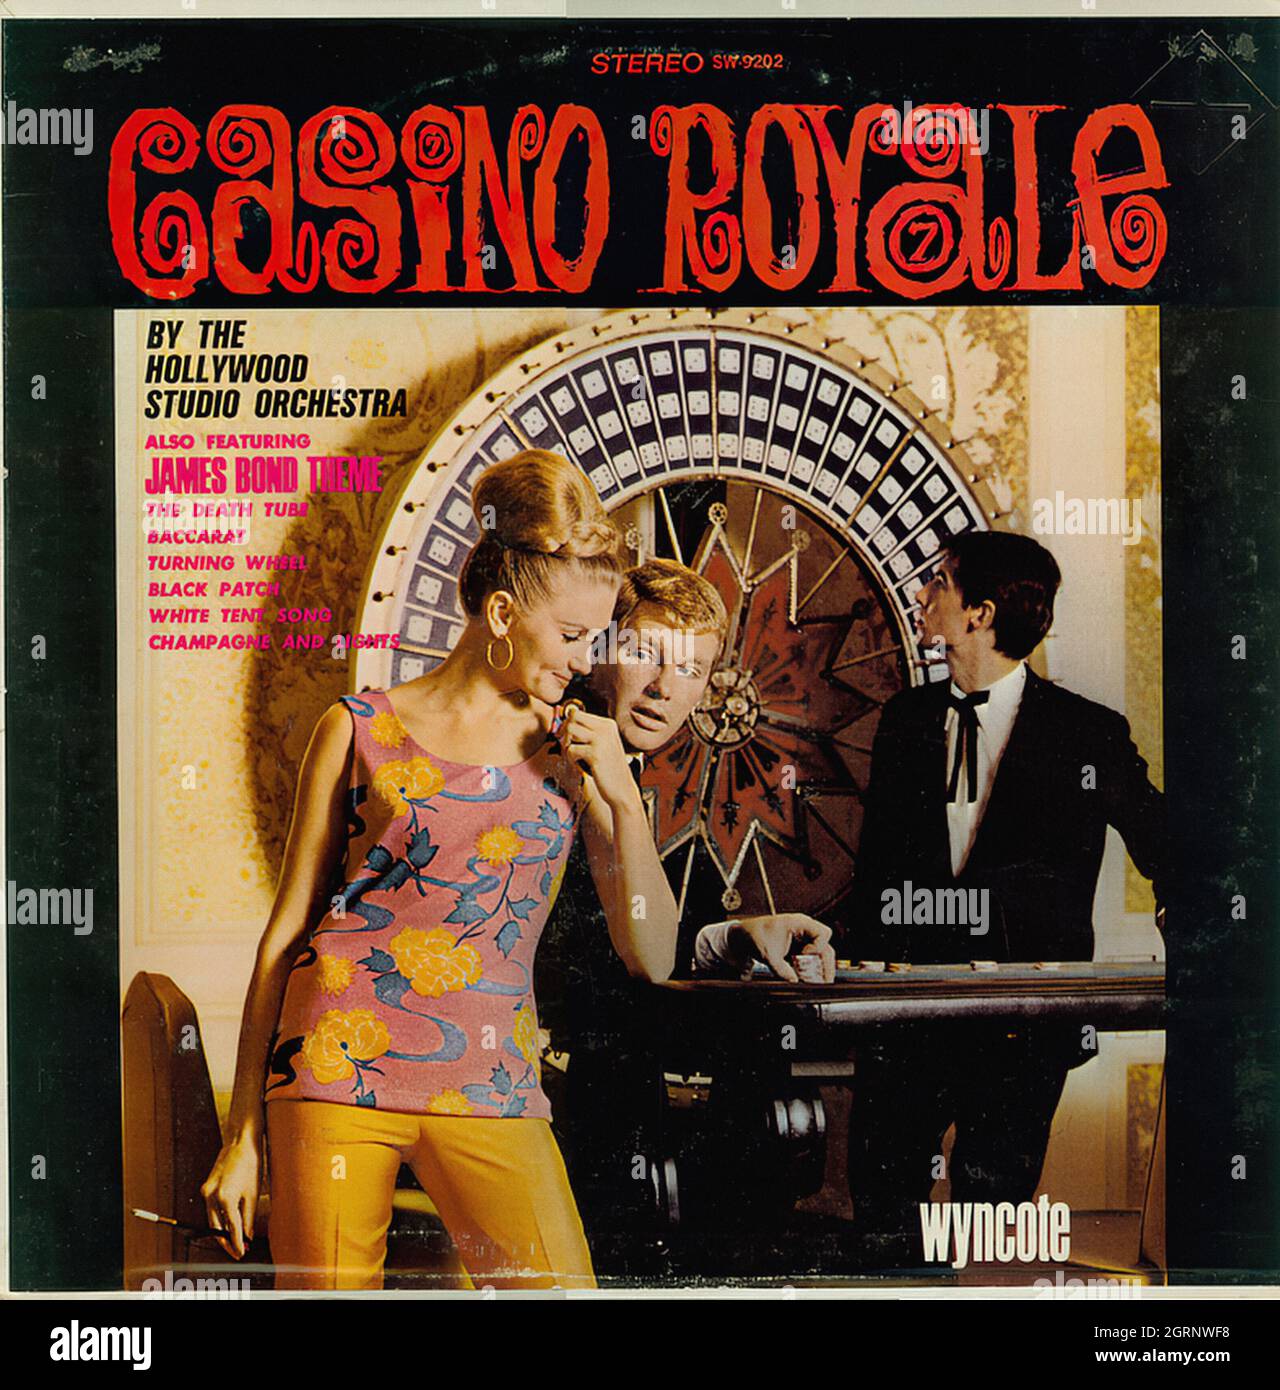 Casino Royale (Wyncote) - Vintage Soundtrack Vinyl Album Stock Photo